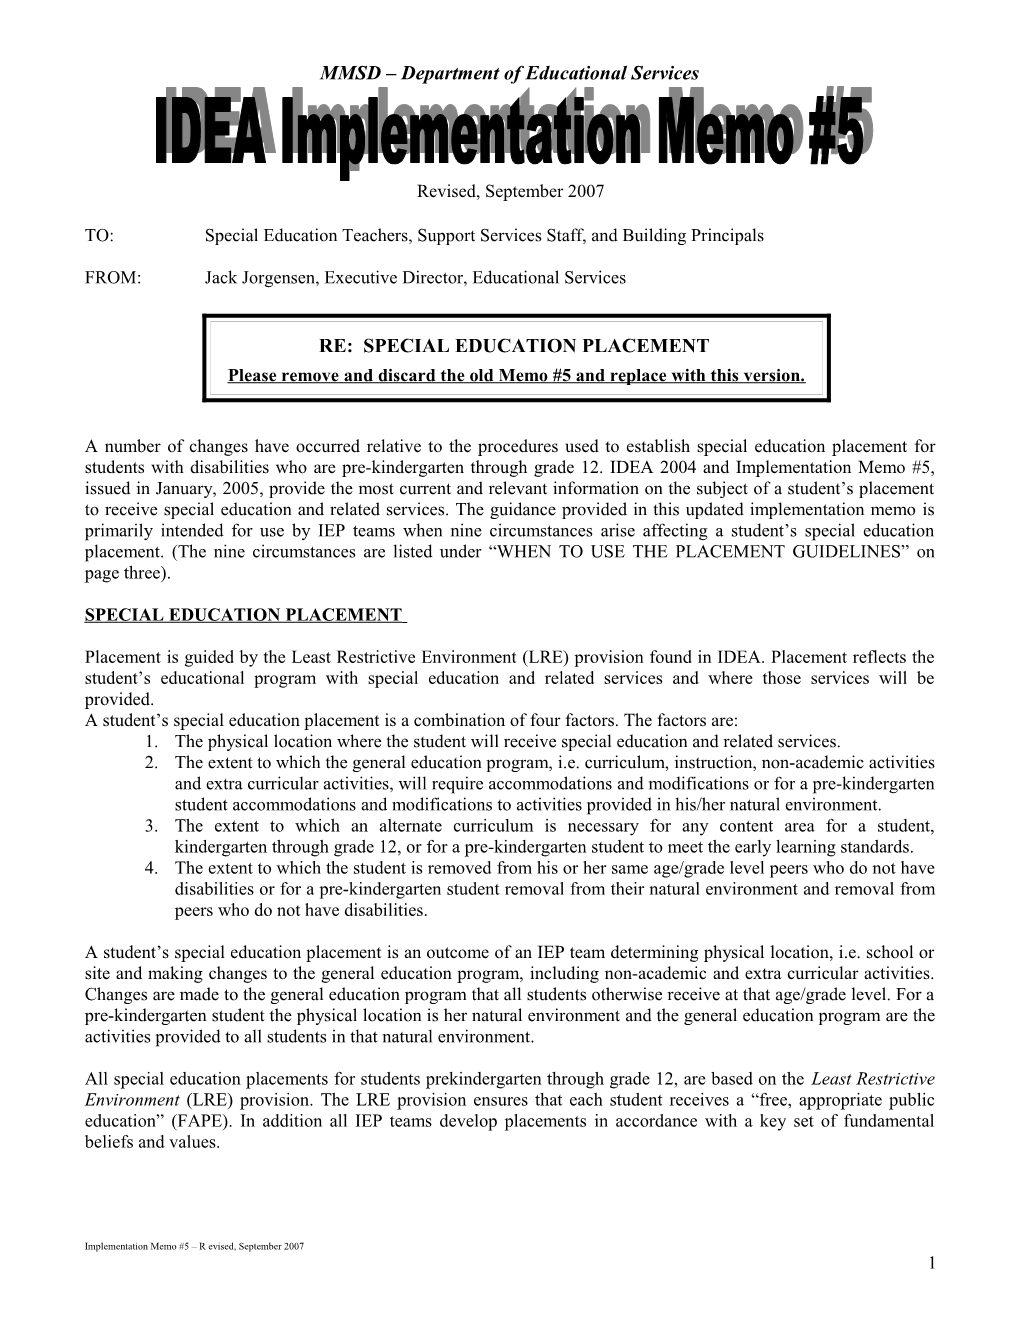 Implementation Memo #5 - Revised, September 2007